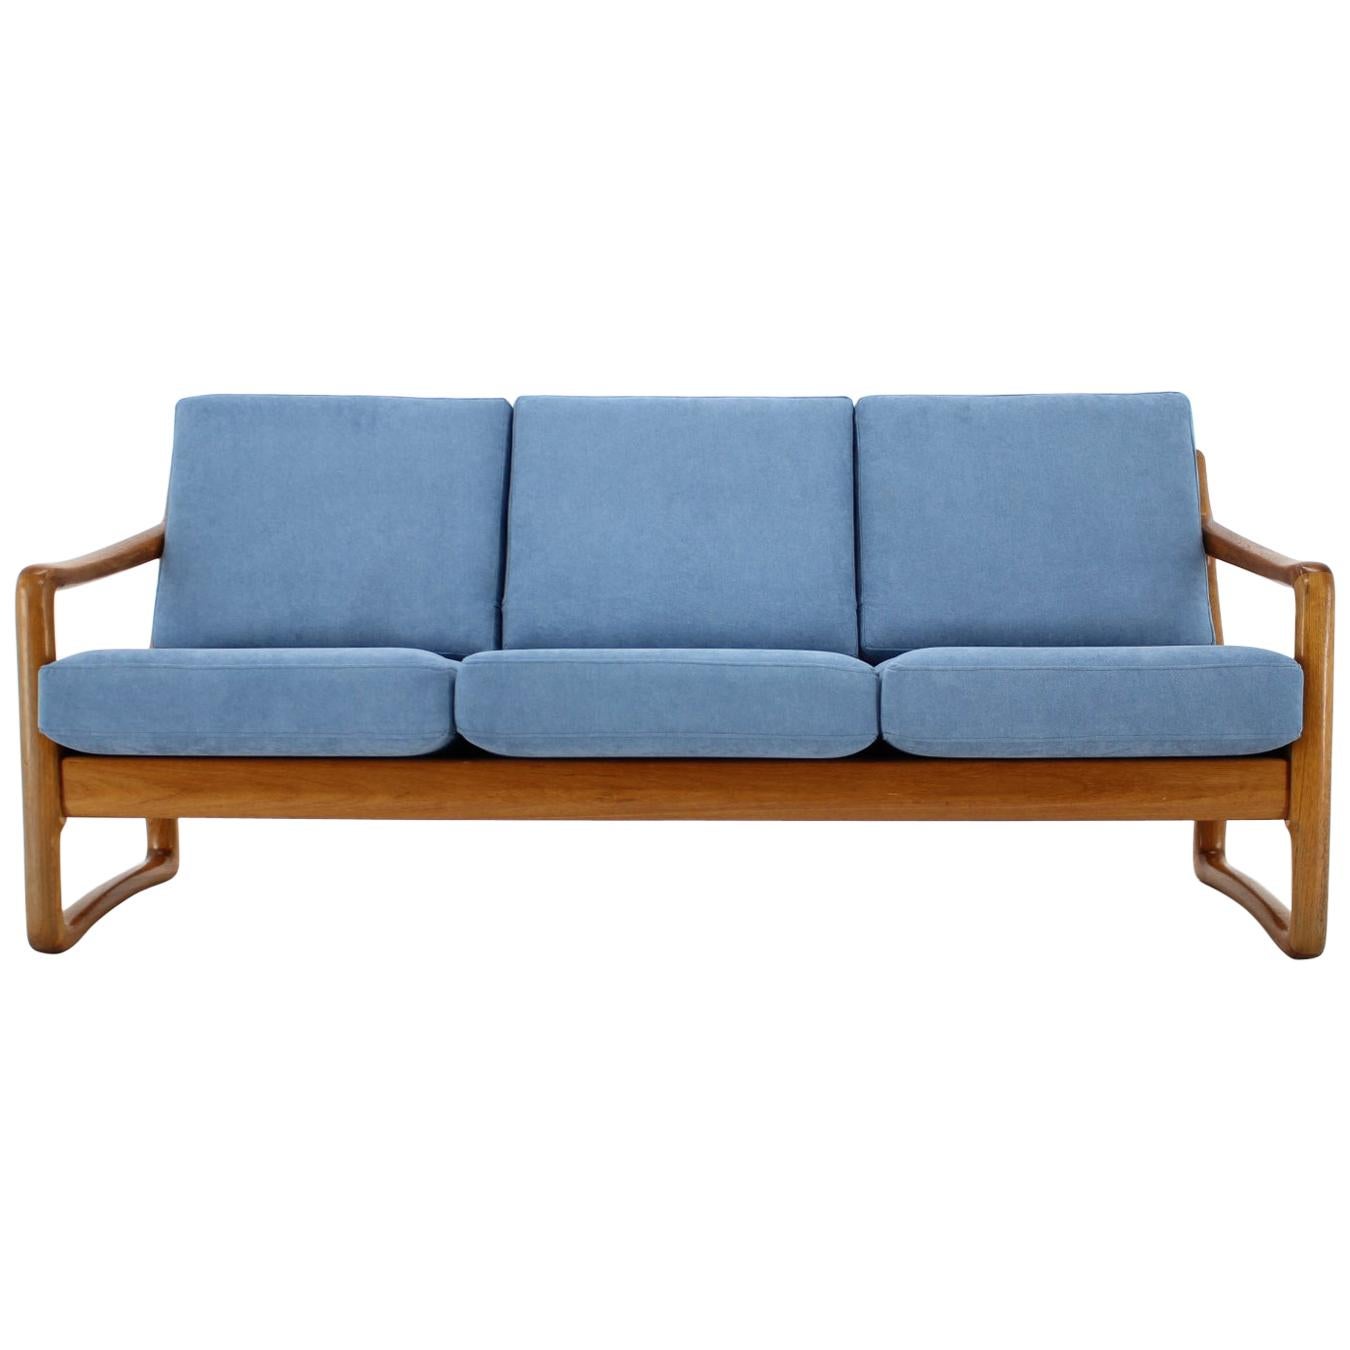 1960s Danish Teak Organic 3-Seat Sofa